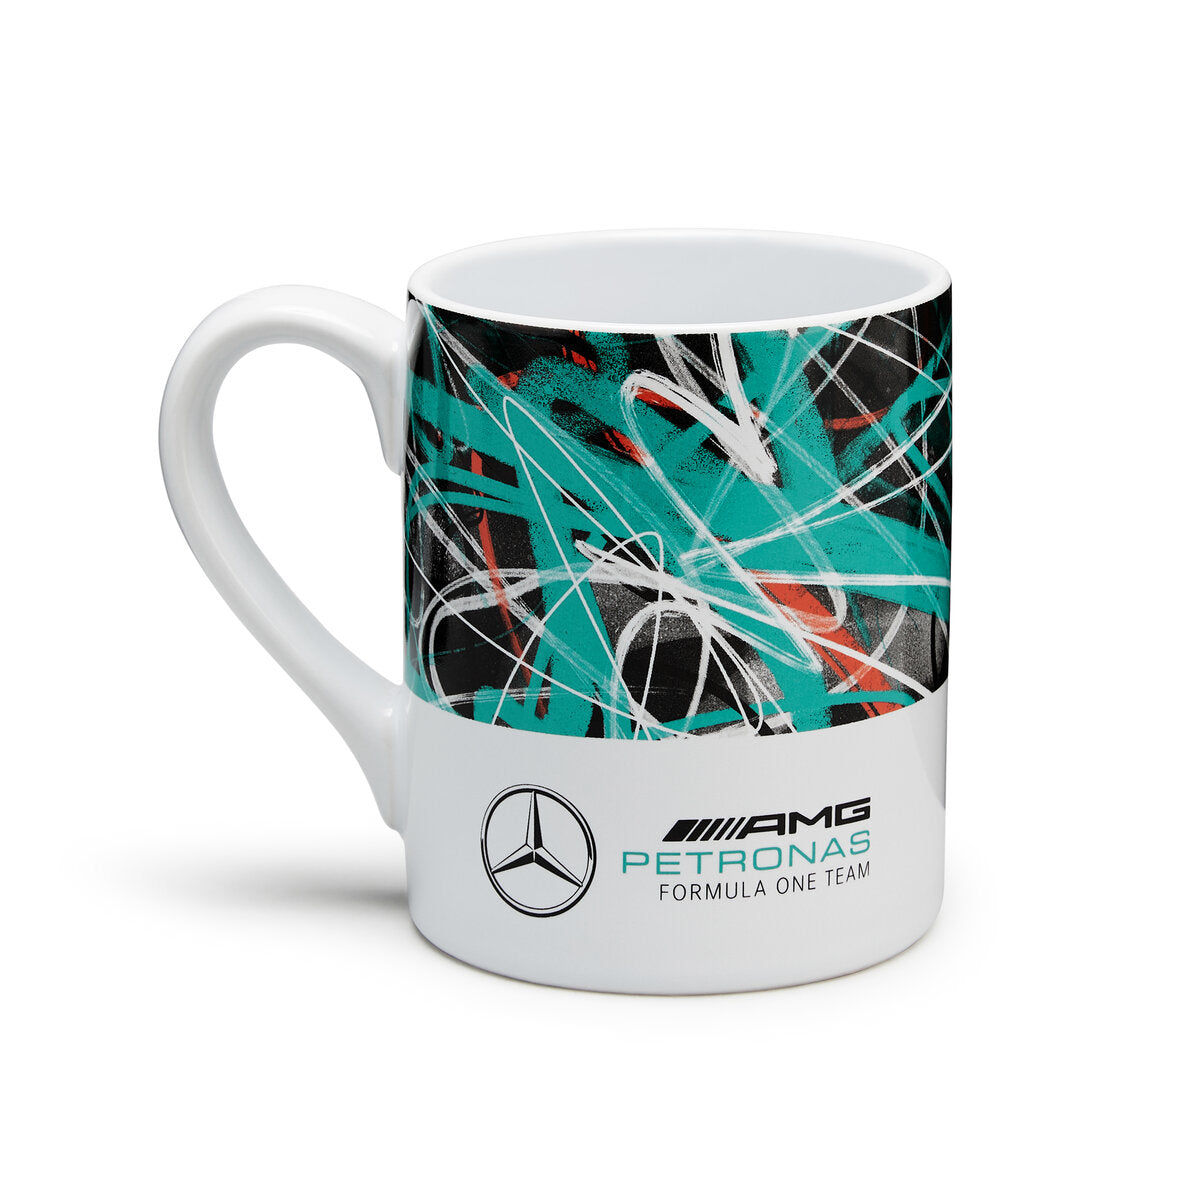 Veste Softshell Mercedes-AMG Petronas Motorsport Team F1 Driver